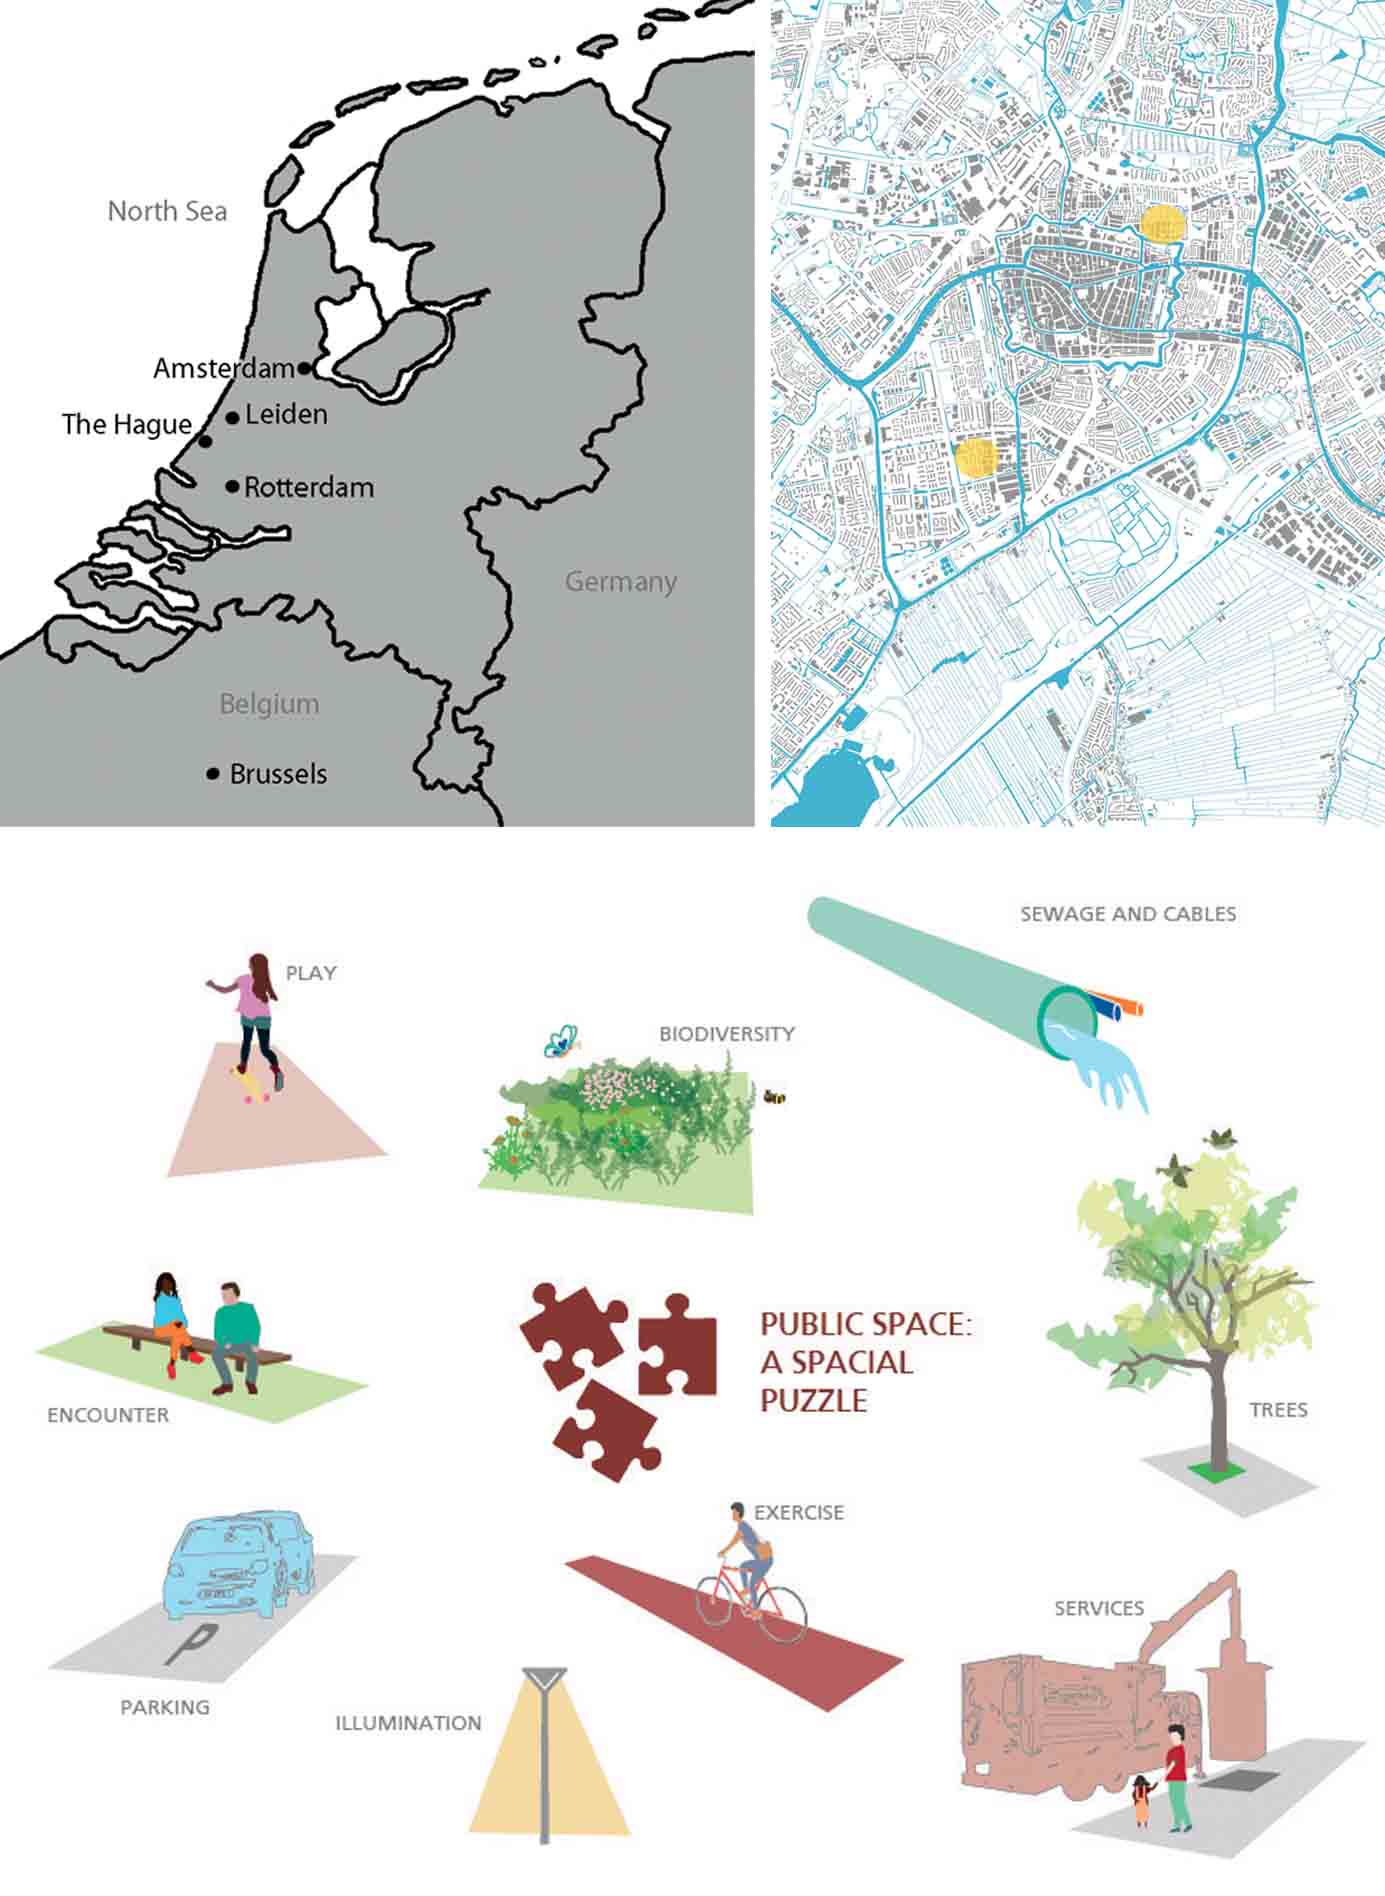 saving-leiden-floods-randstad-netherlands-two-pilot-projects-climate-adaption-dense-city-complex-puzzle